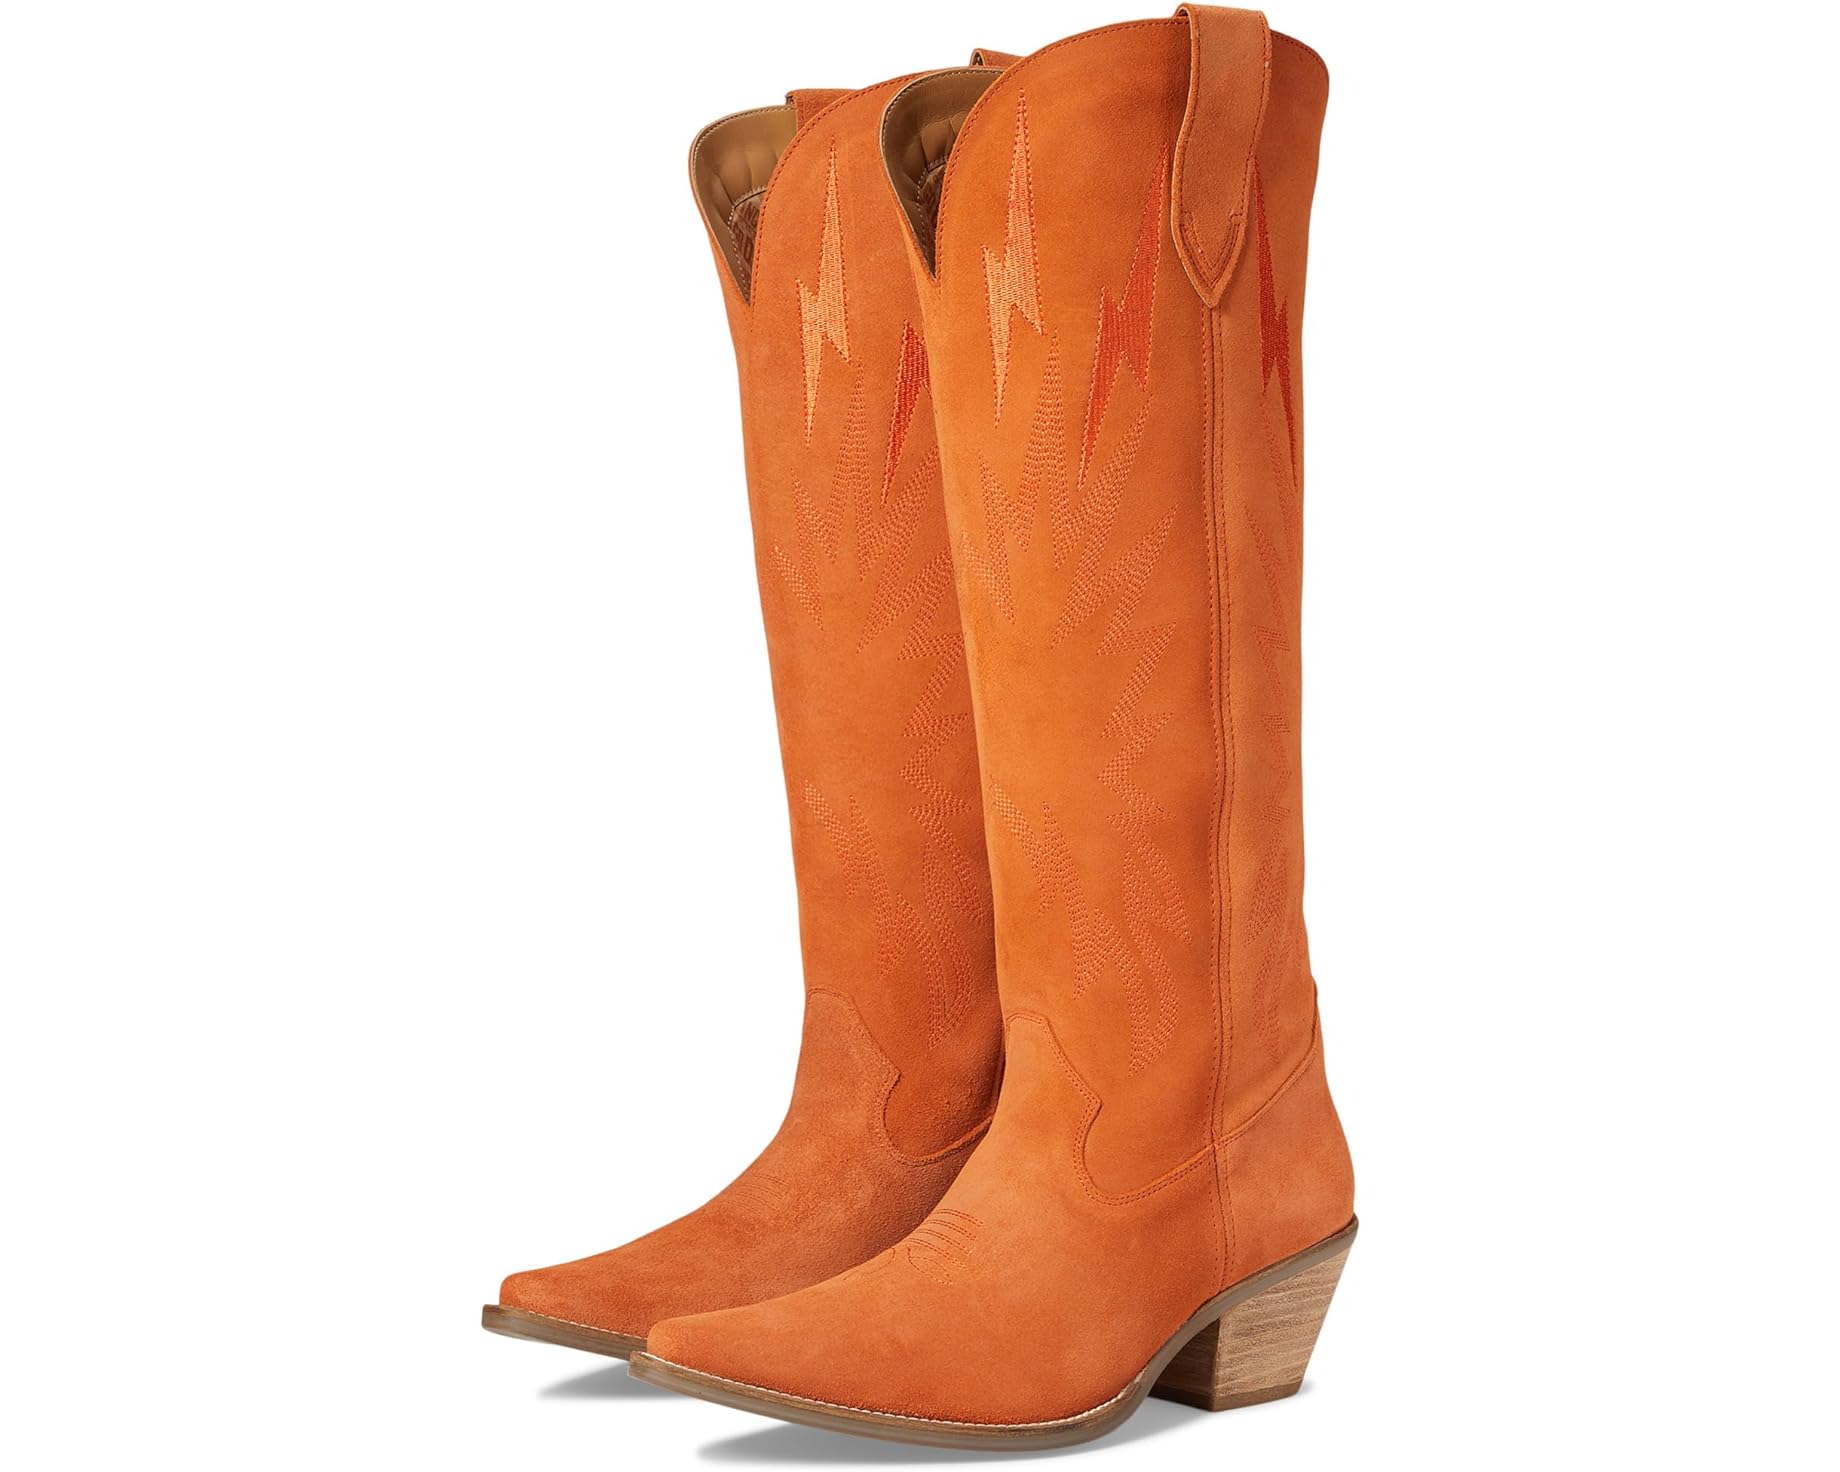 Thunder Road Black dingo women's boots DI597 orange